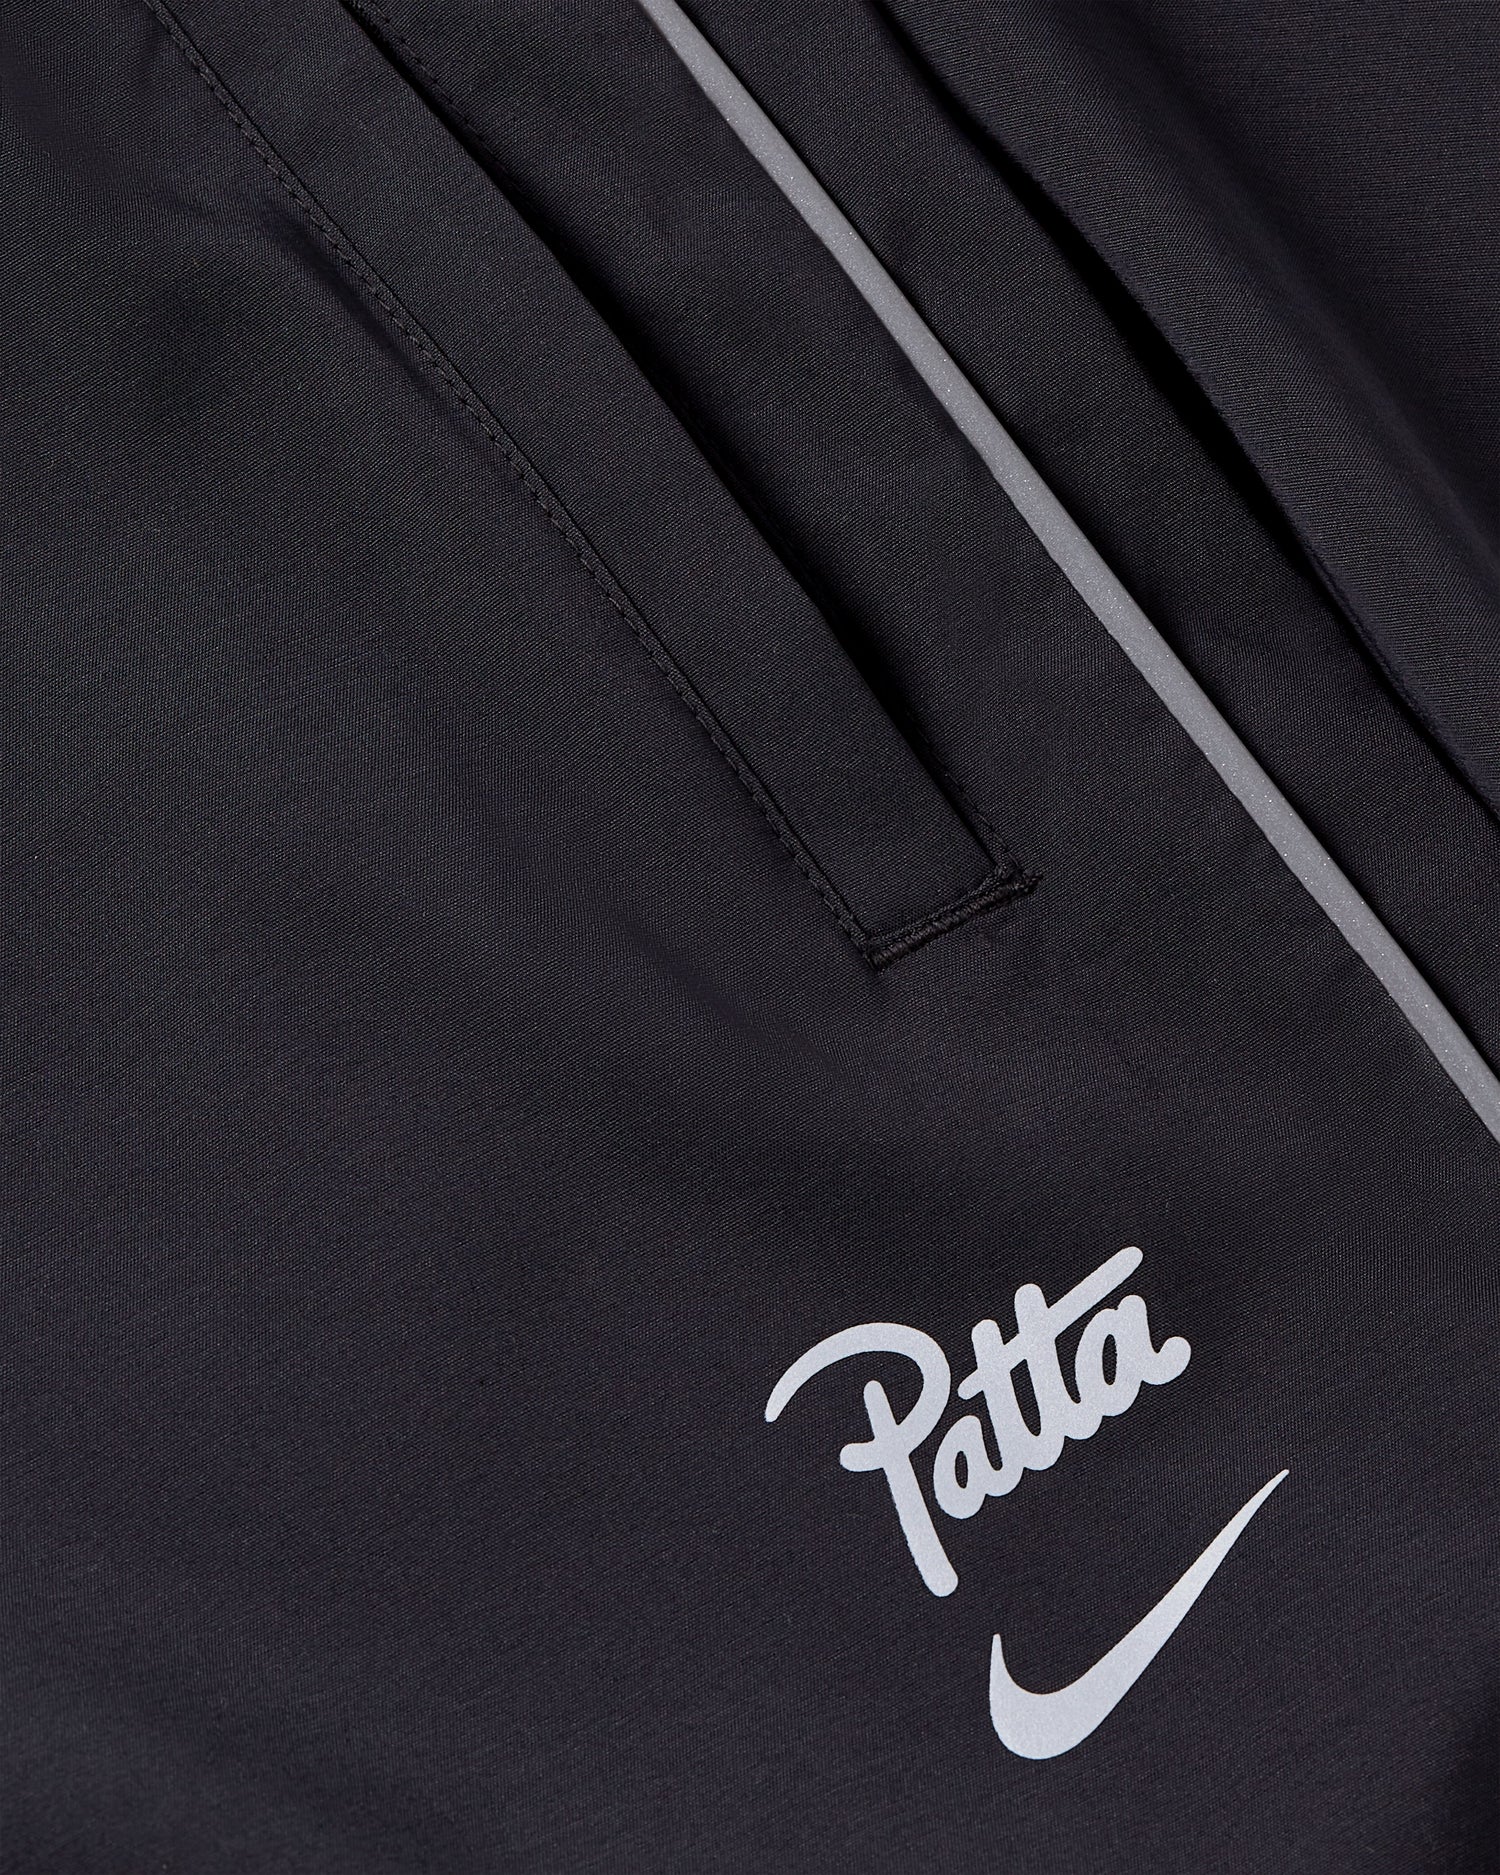 Nike x Patta Running Team Track Pants (Black)